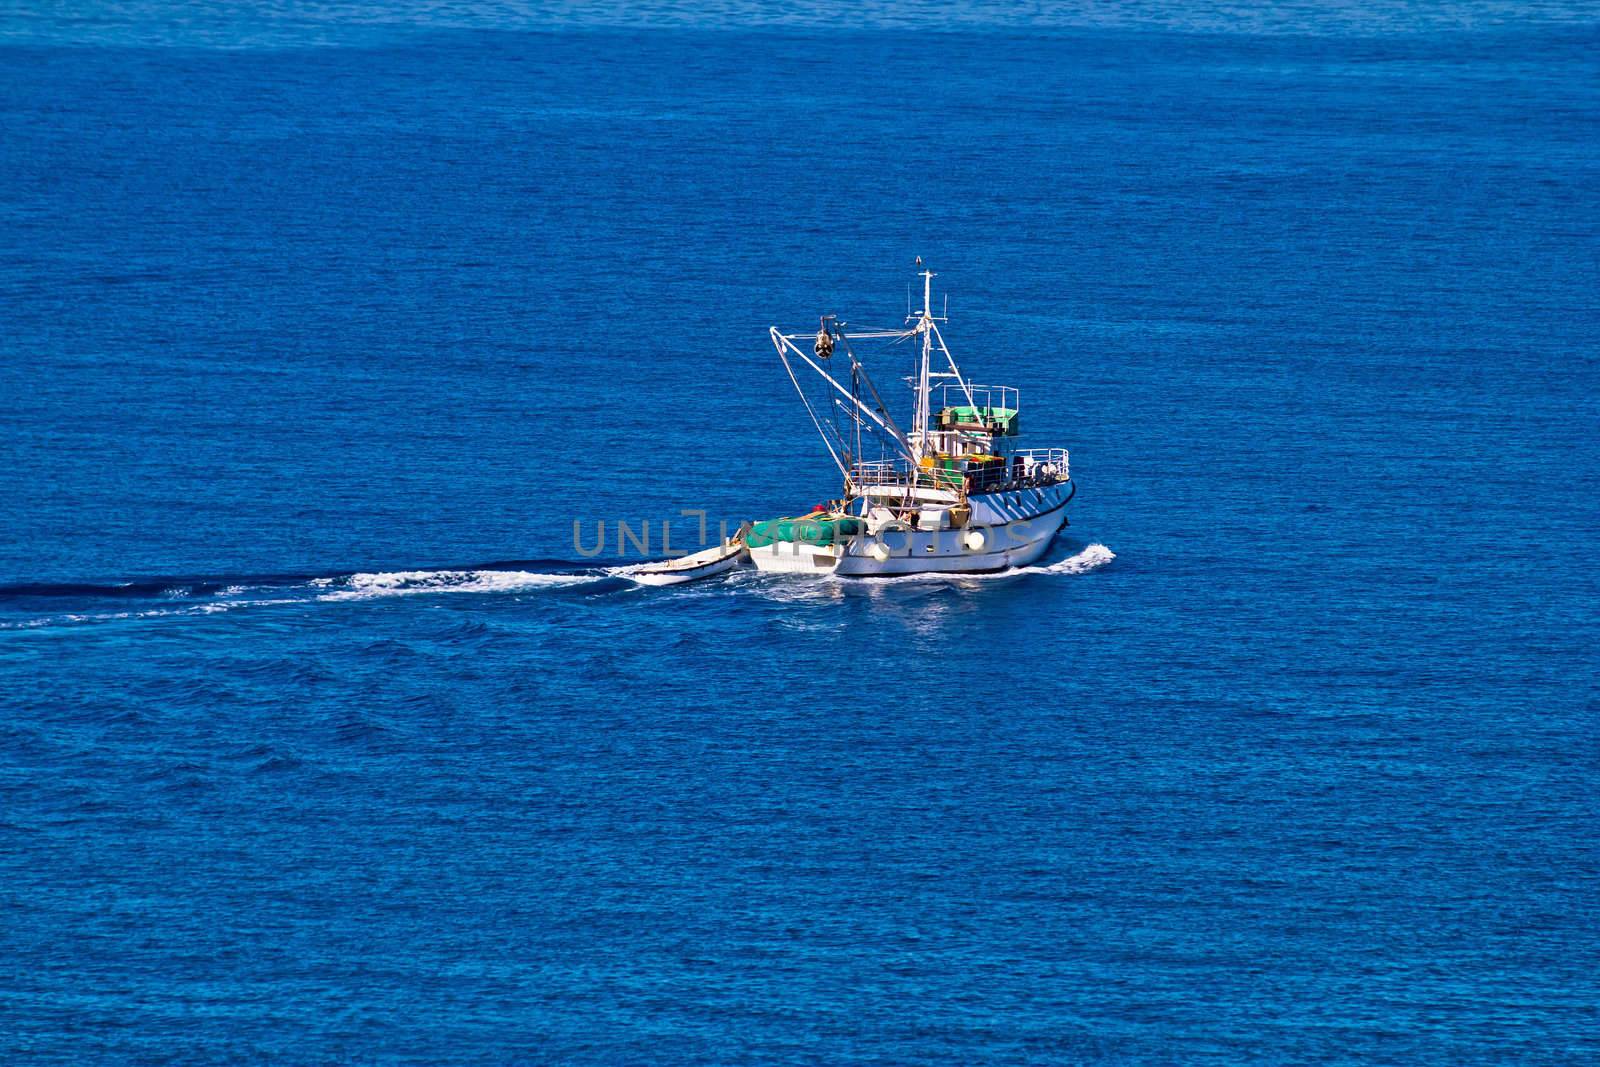 Fishing trawler open water aerial view by xbrchx